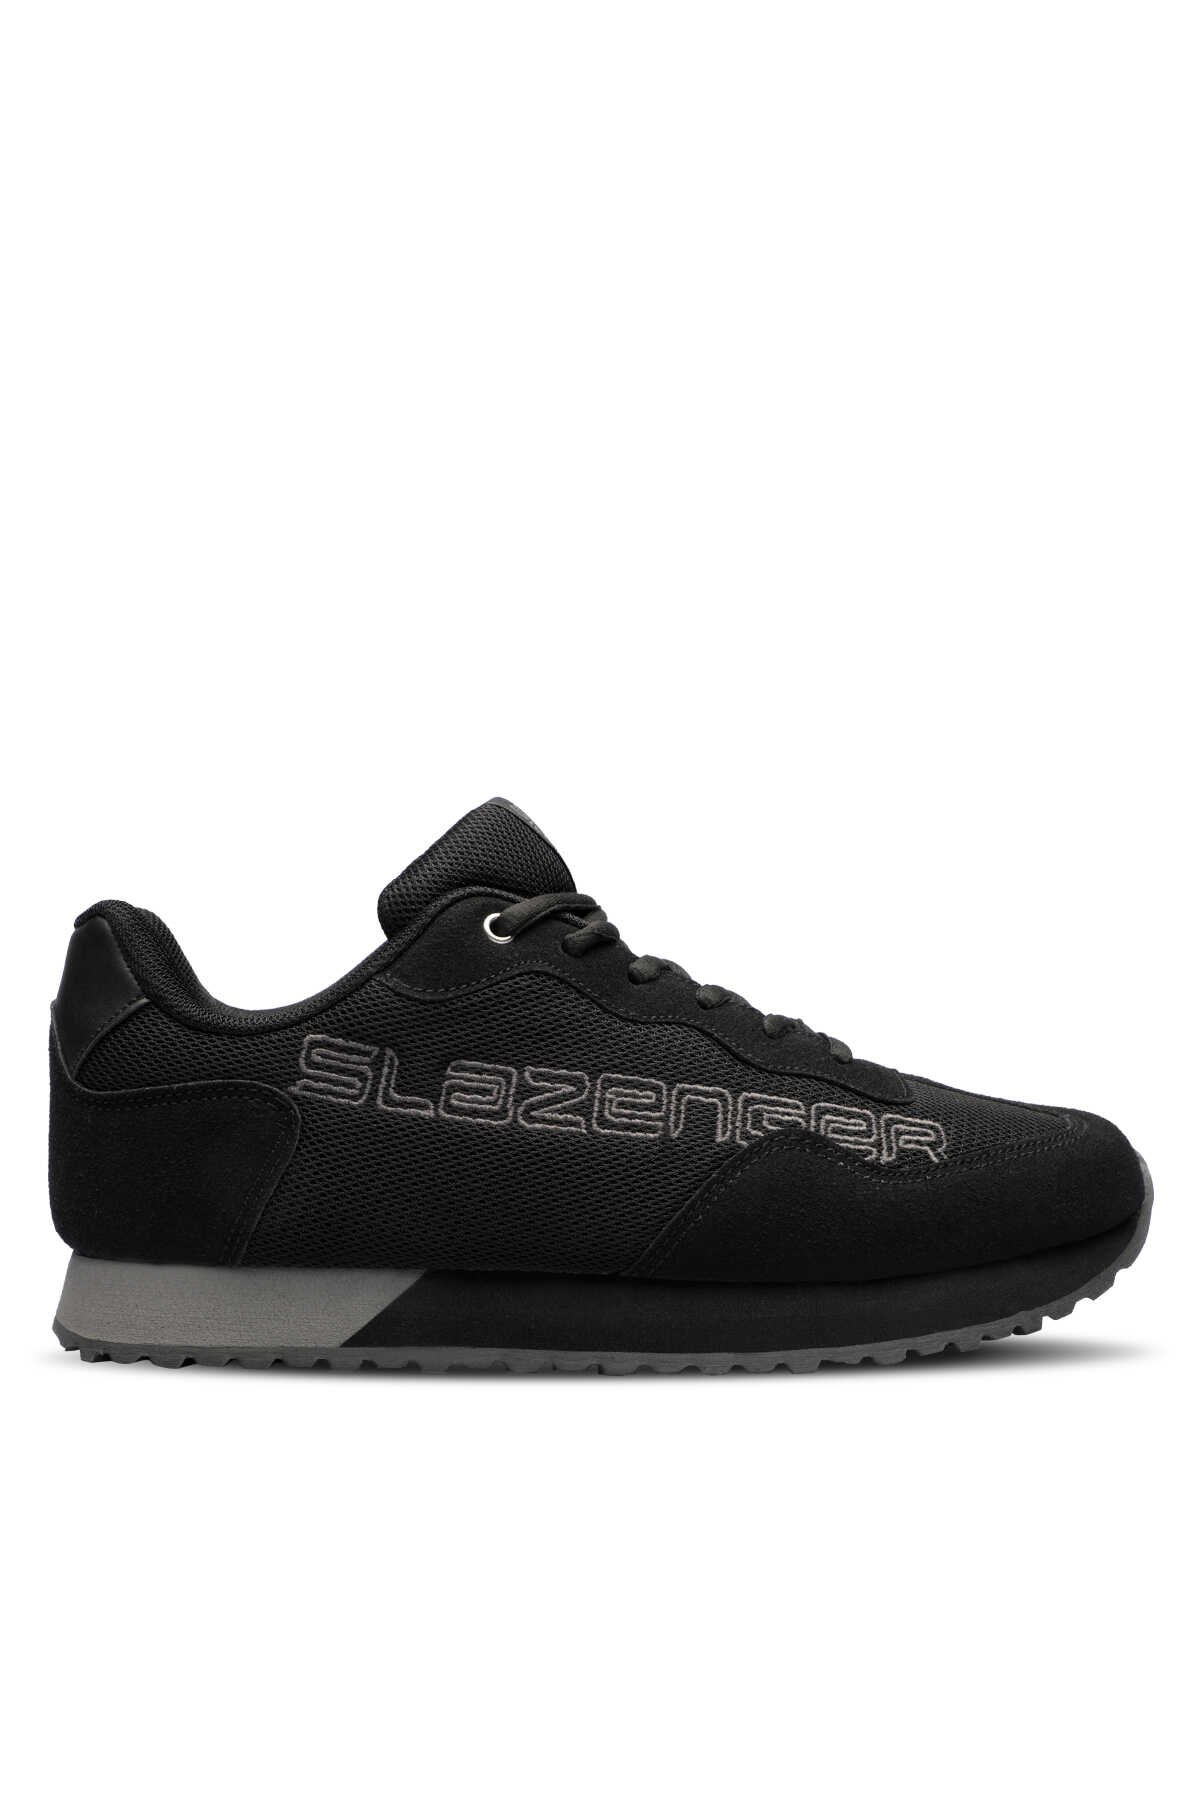 Slazenger - Slazenger BAXTER I Sneaker Erkek Ayakkabı Siyah